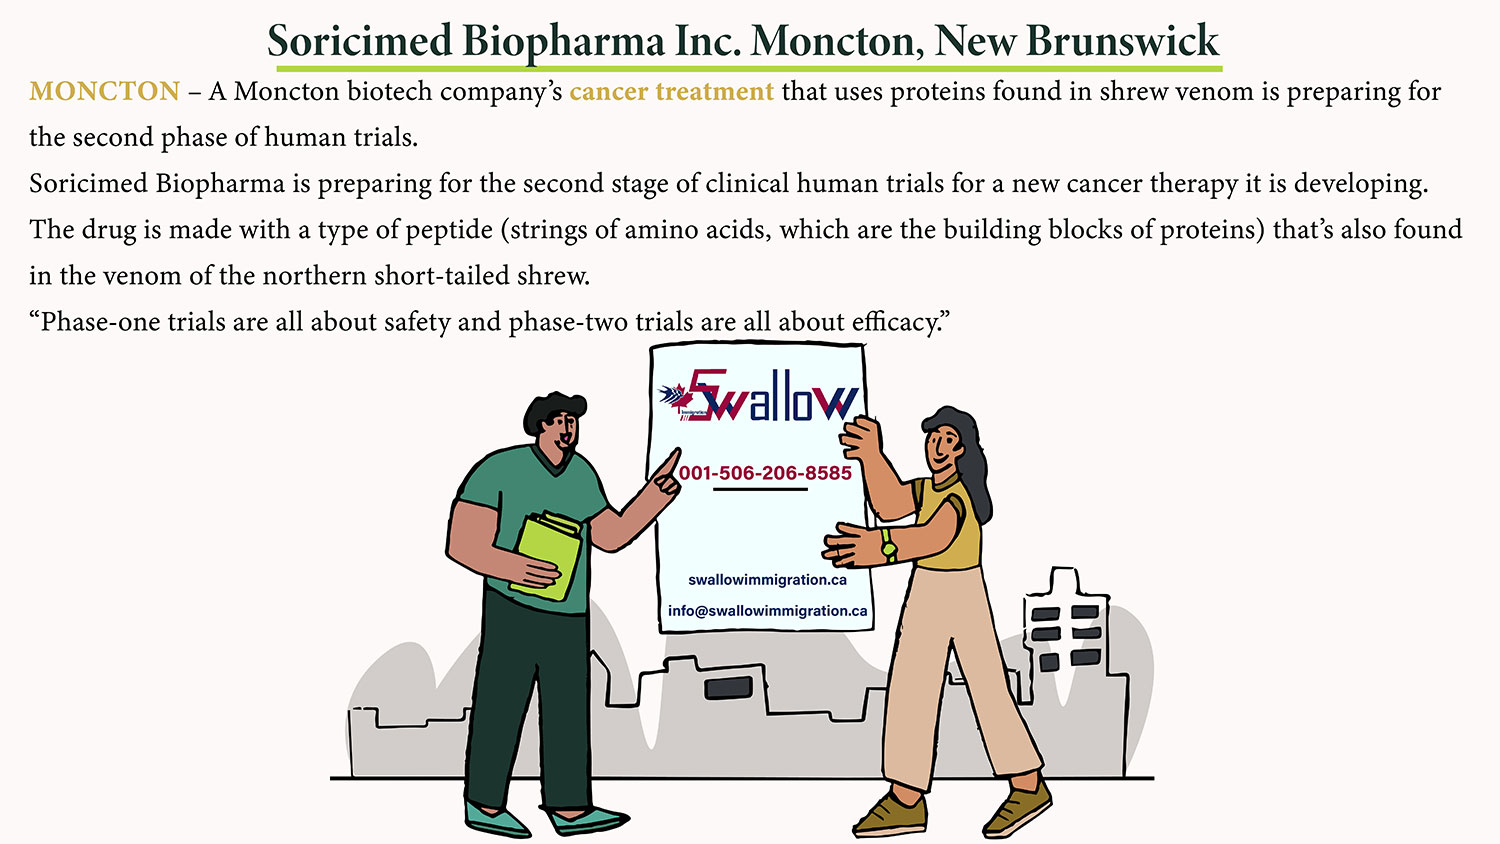 Soricimed Biopharma Inc. Moncton, New Brunswick: